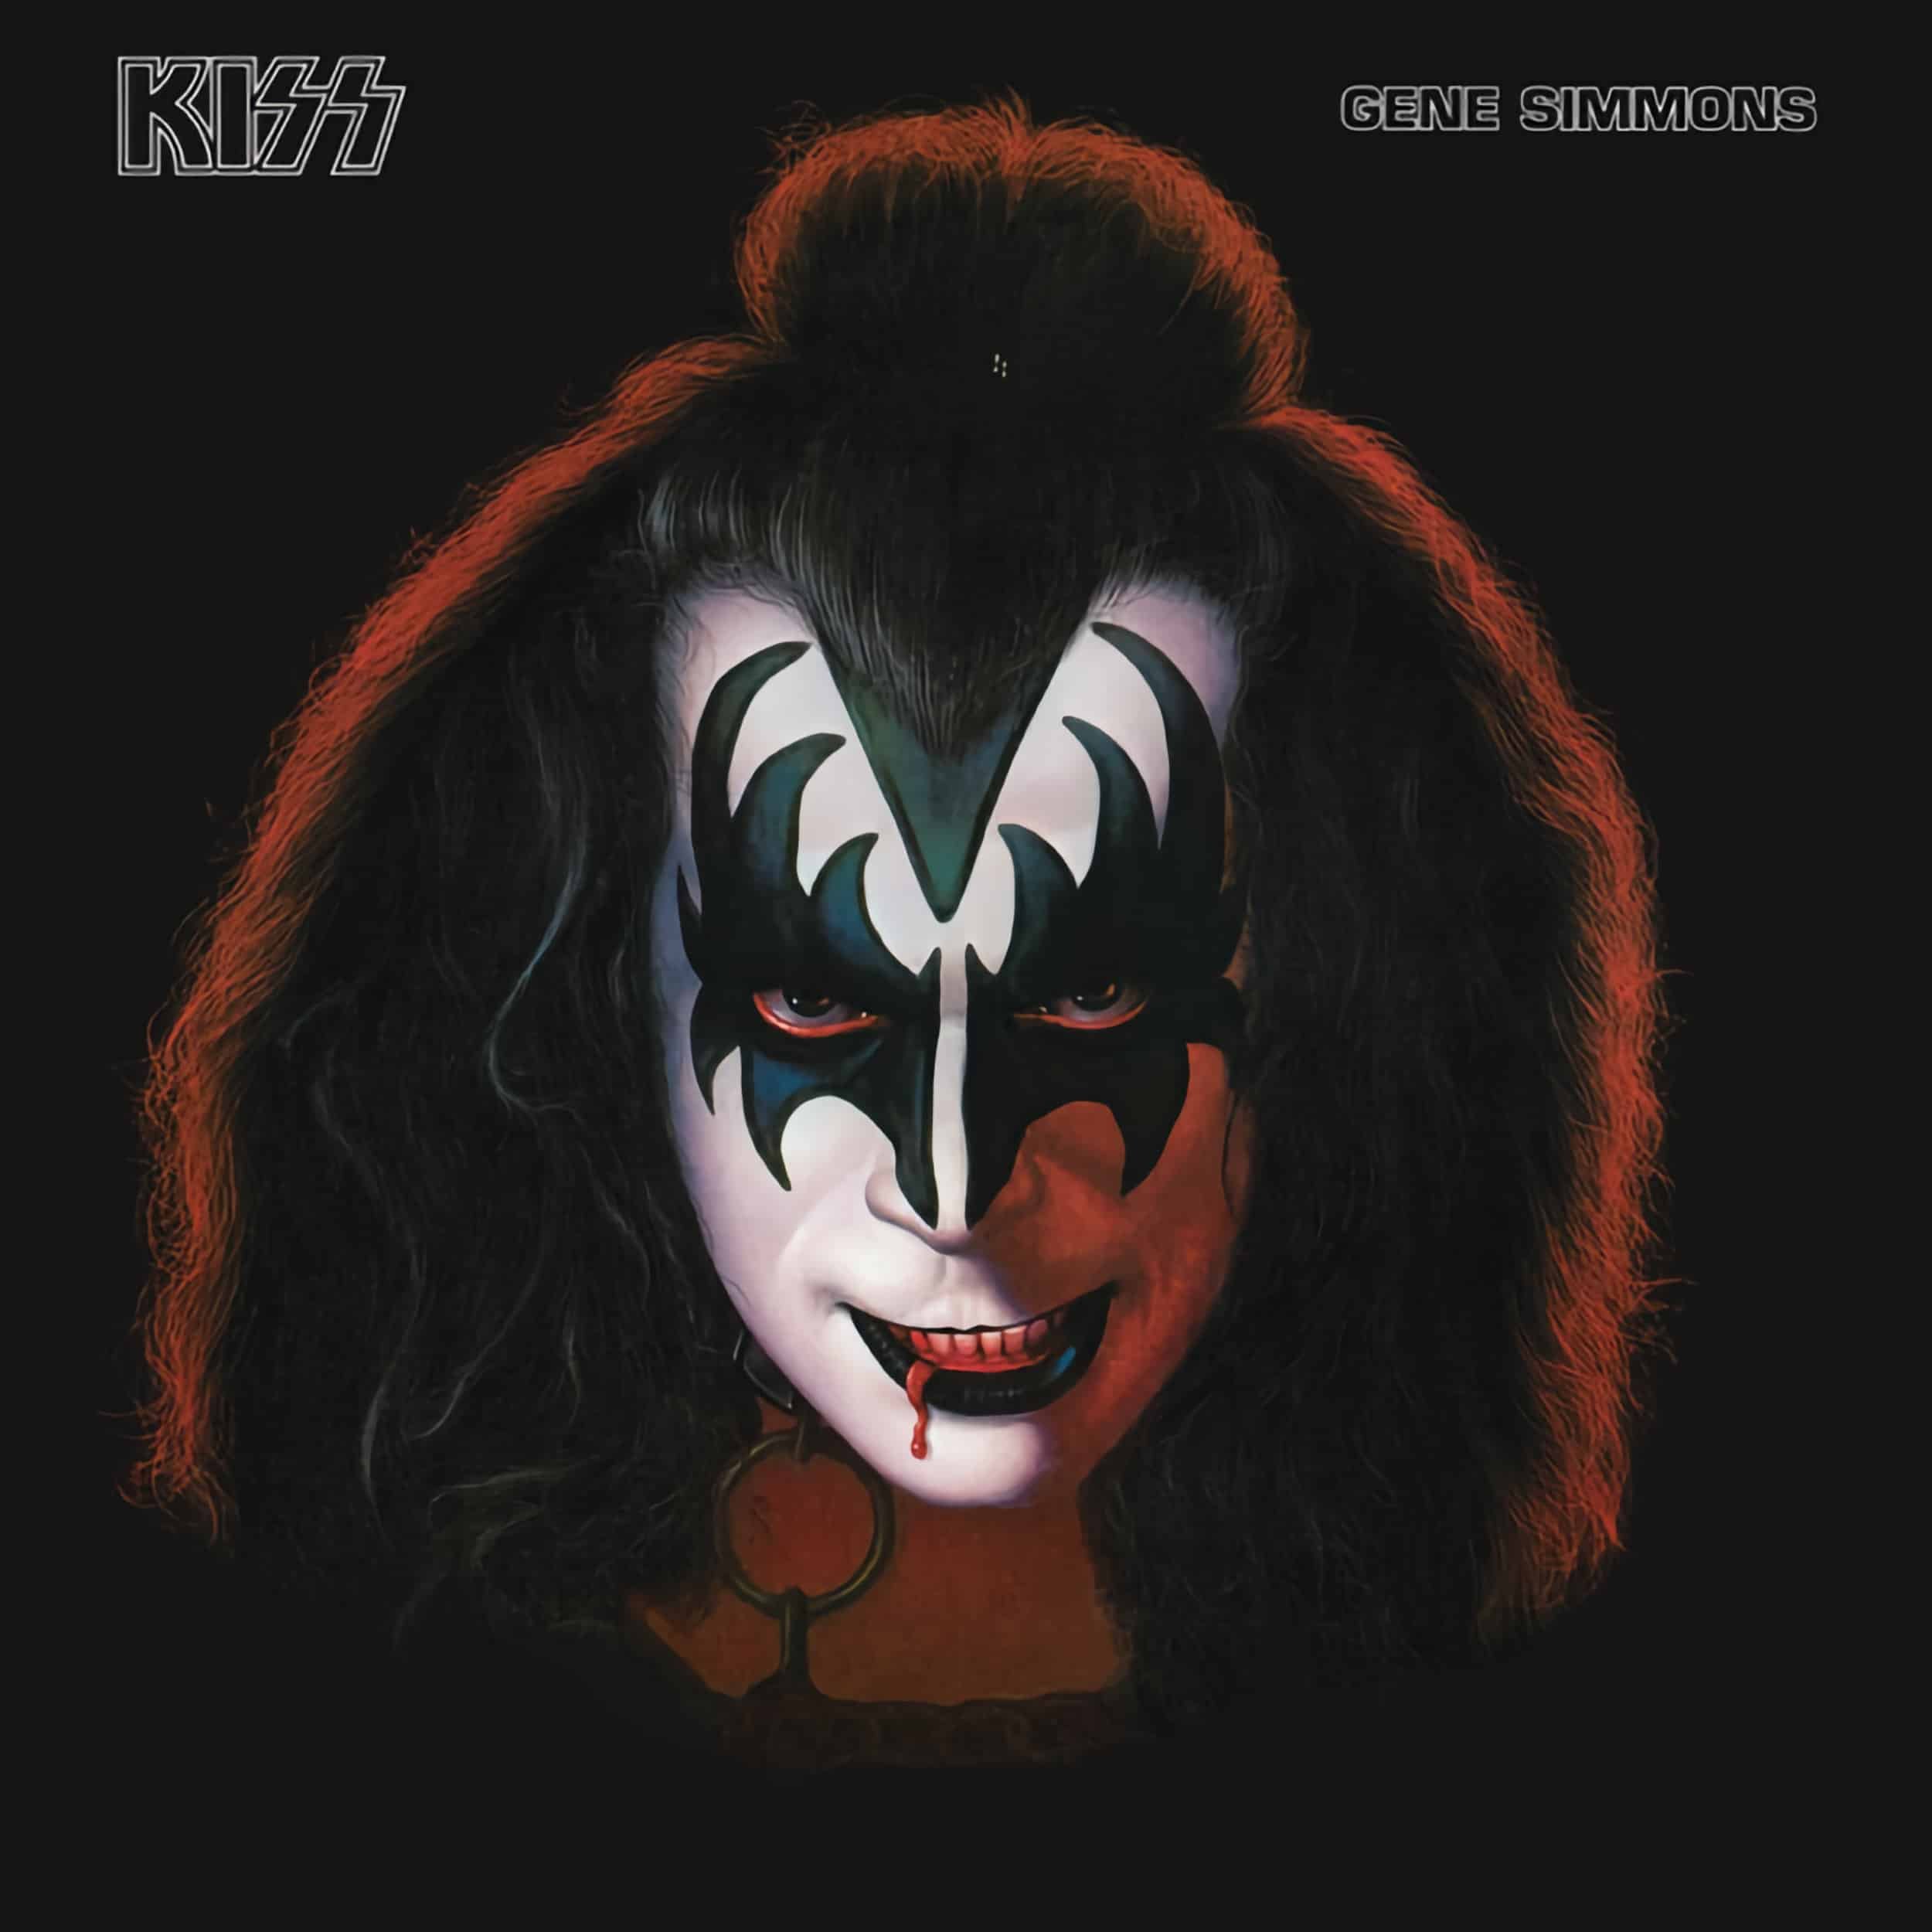 Gene Simmons – Kiss: Gene Simmons